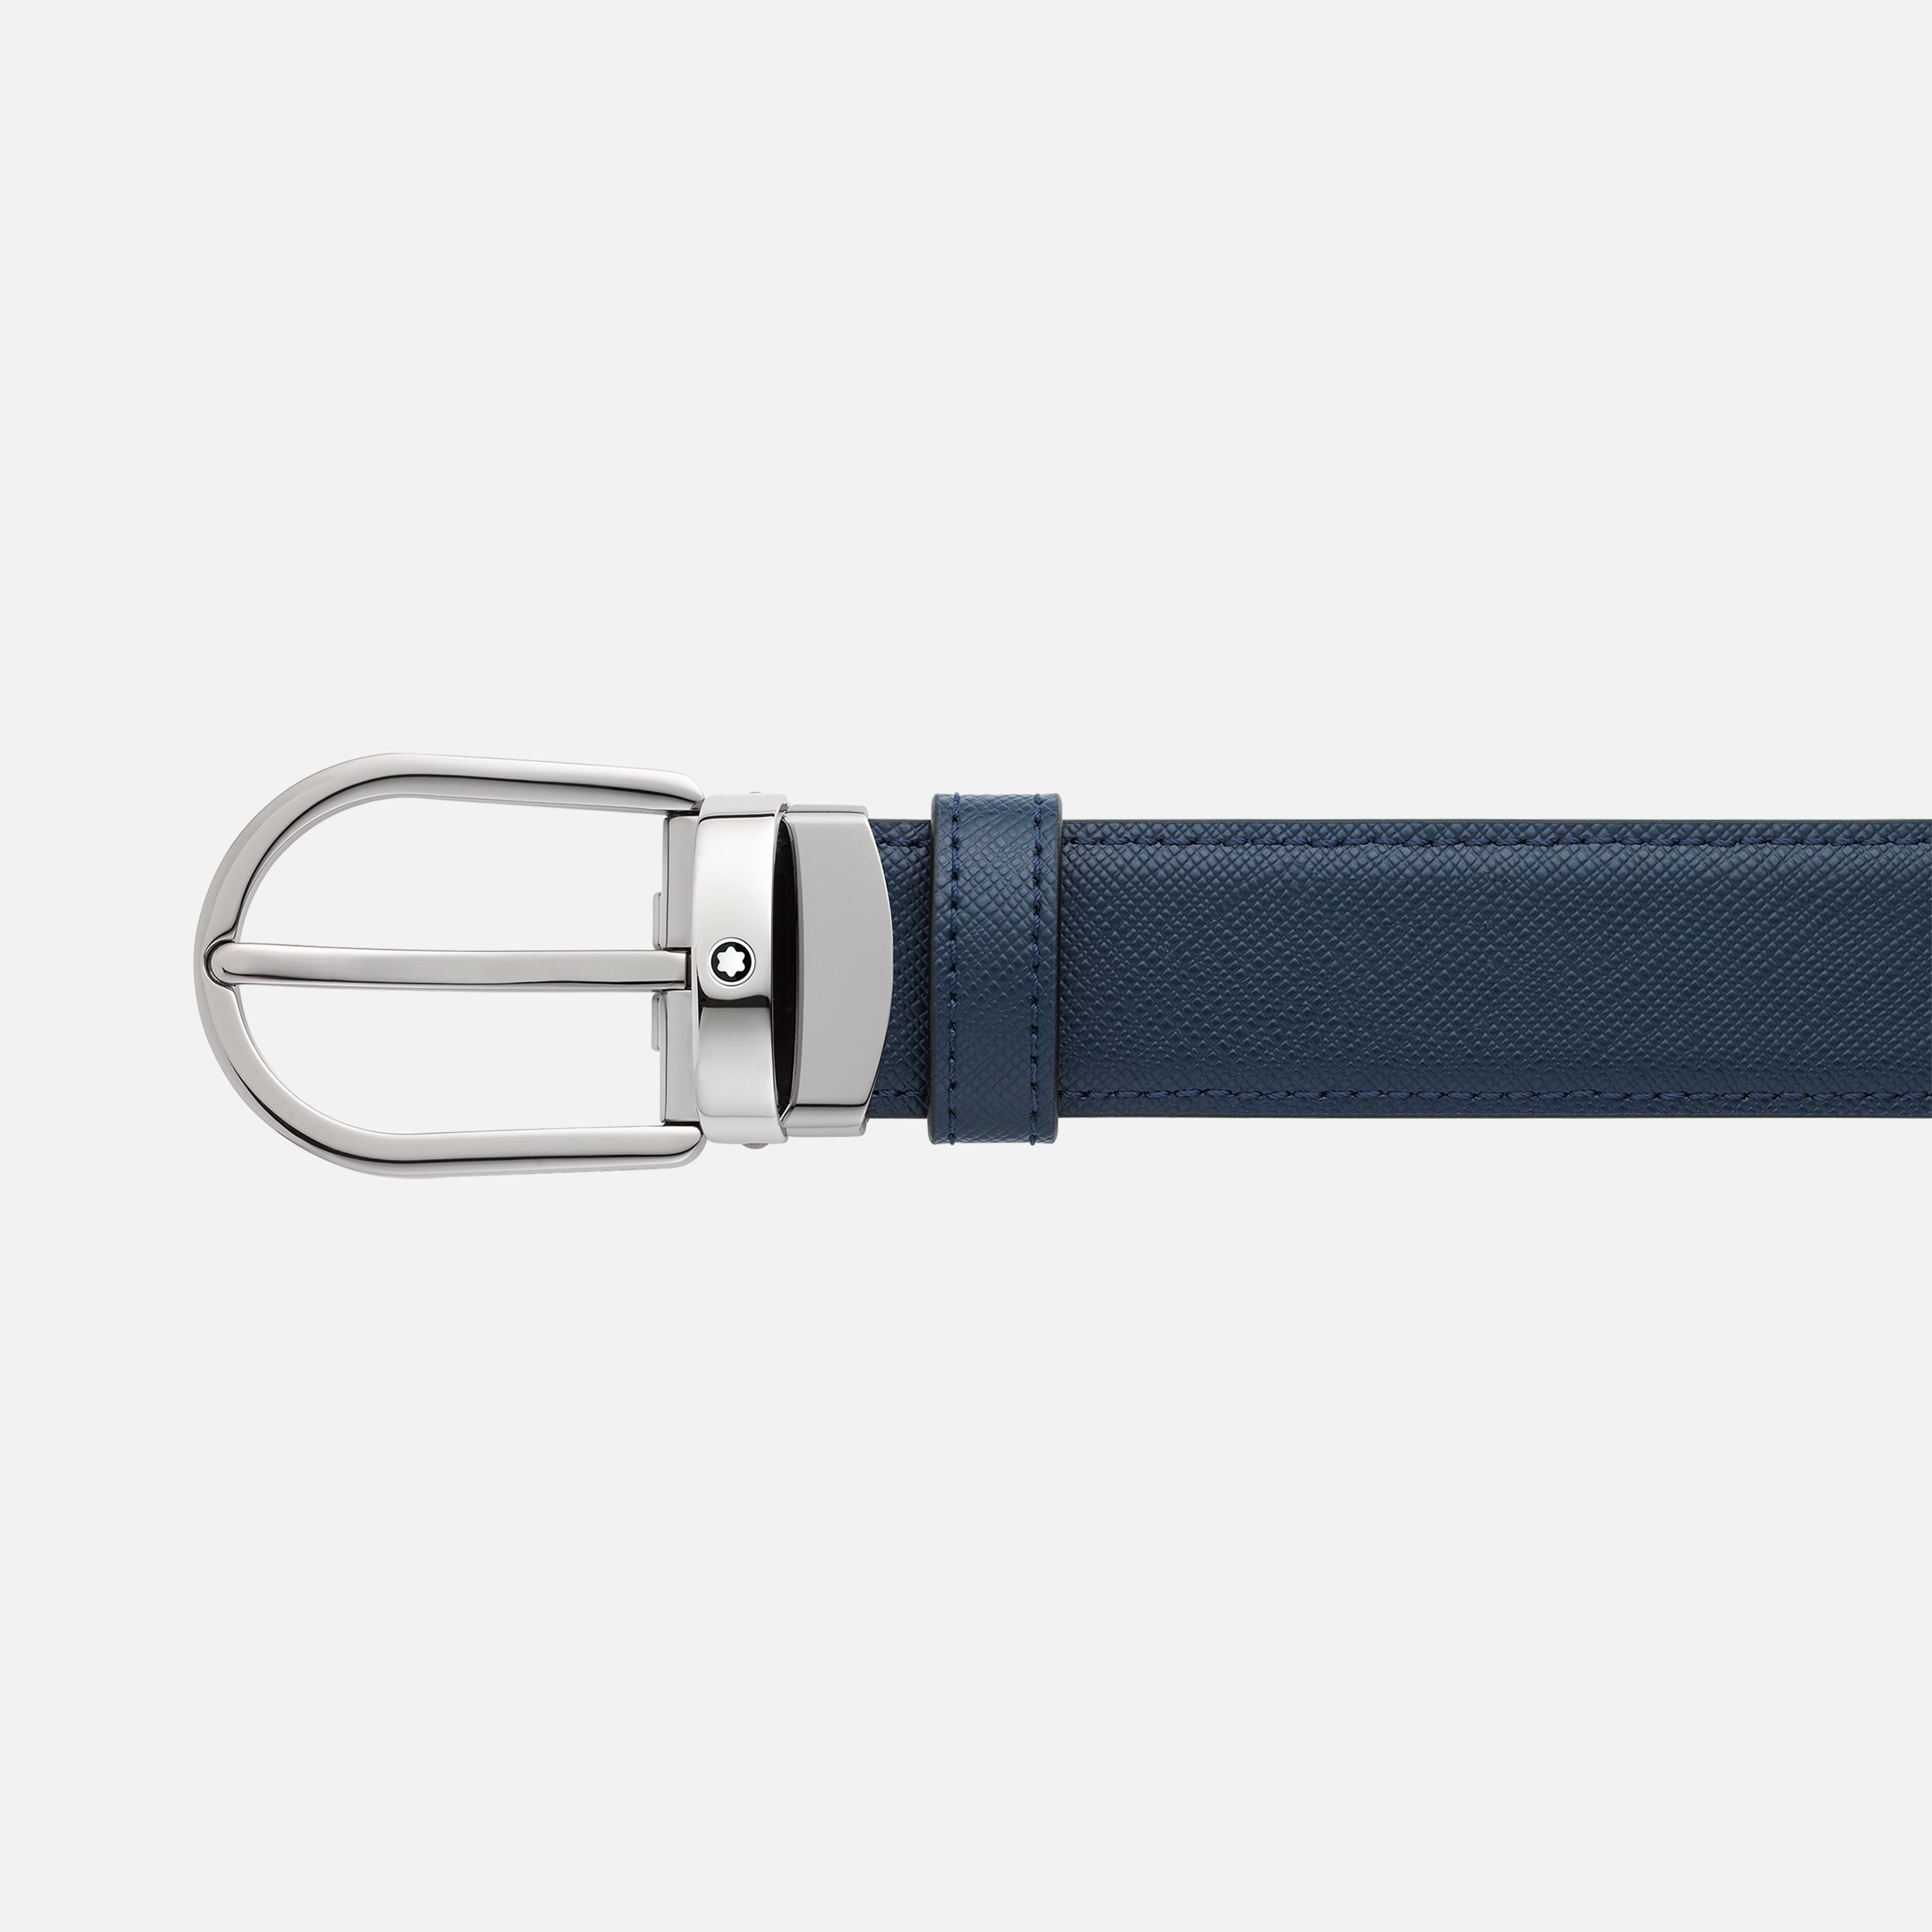 Horseshoe buckle black/blue 30 mm reversible leather belt - 3